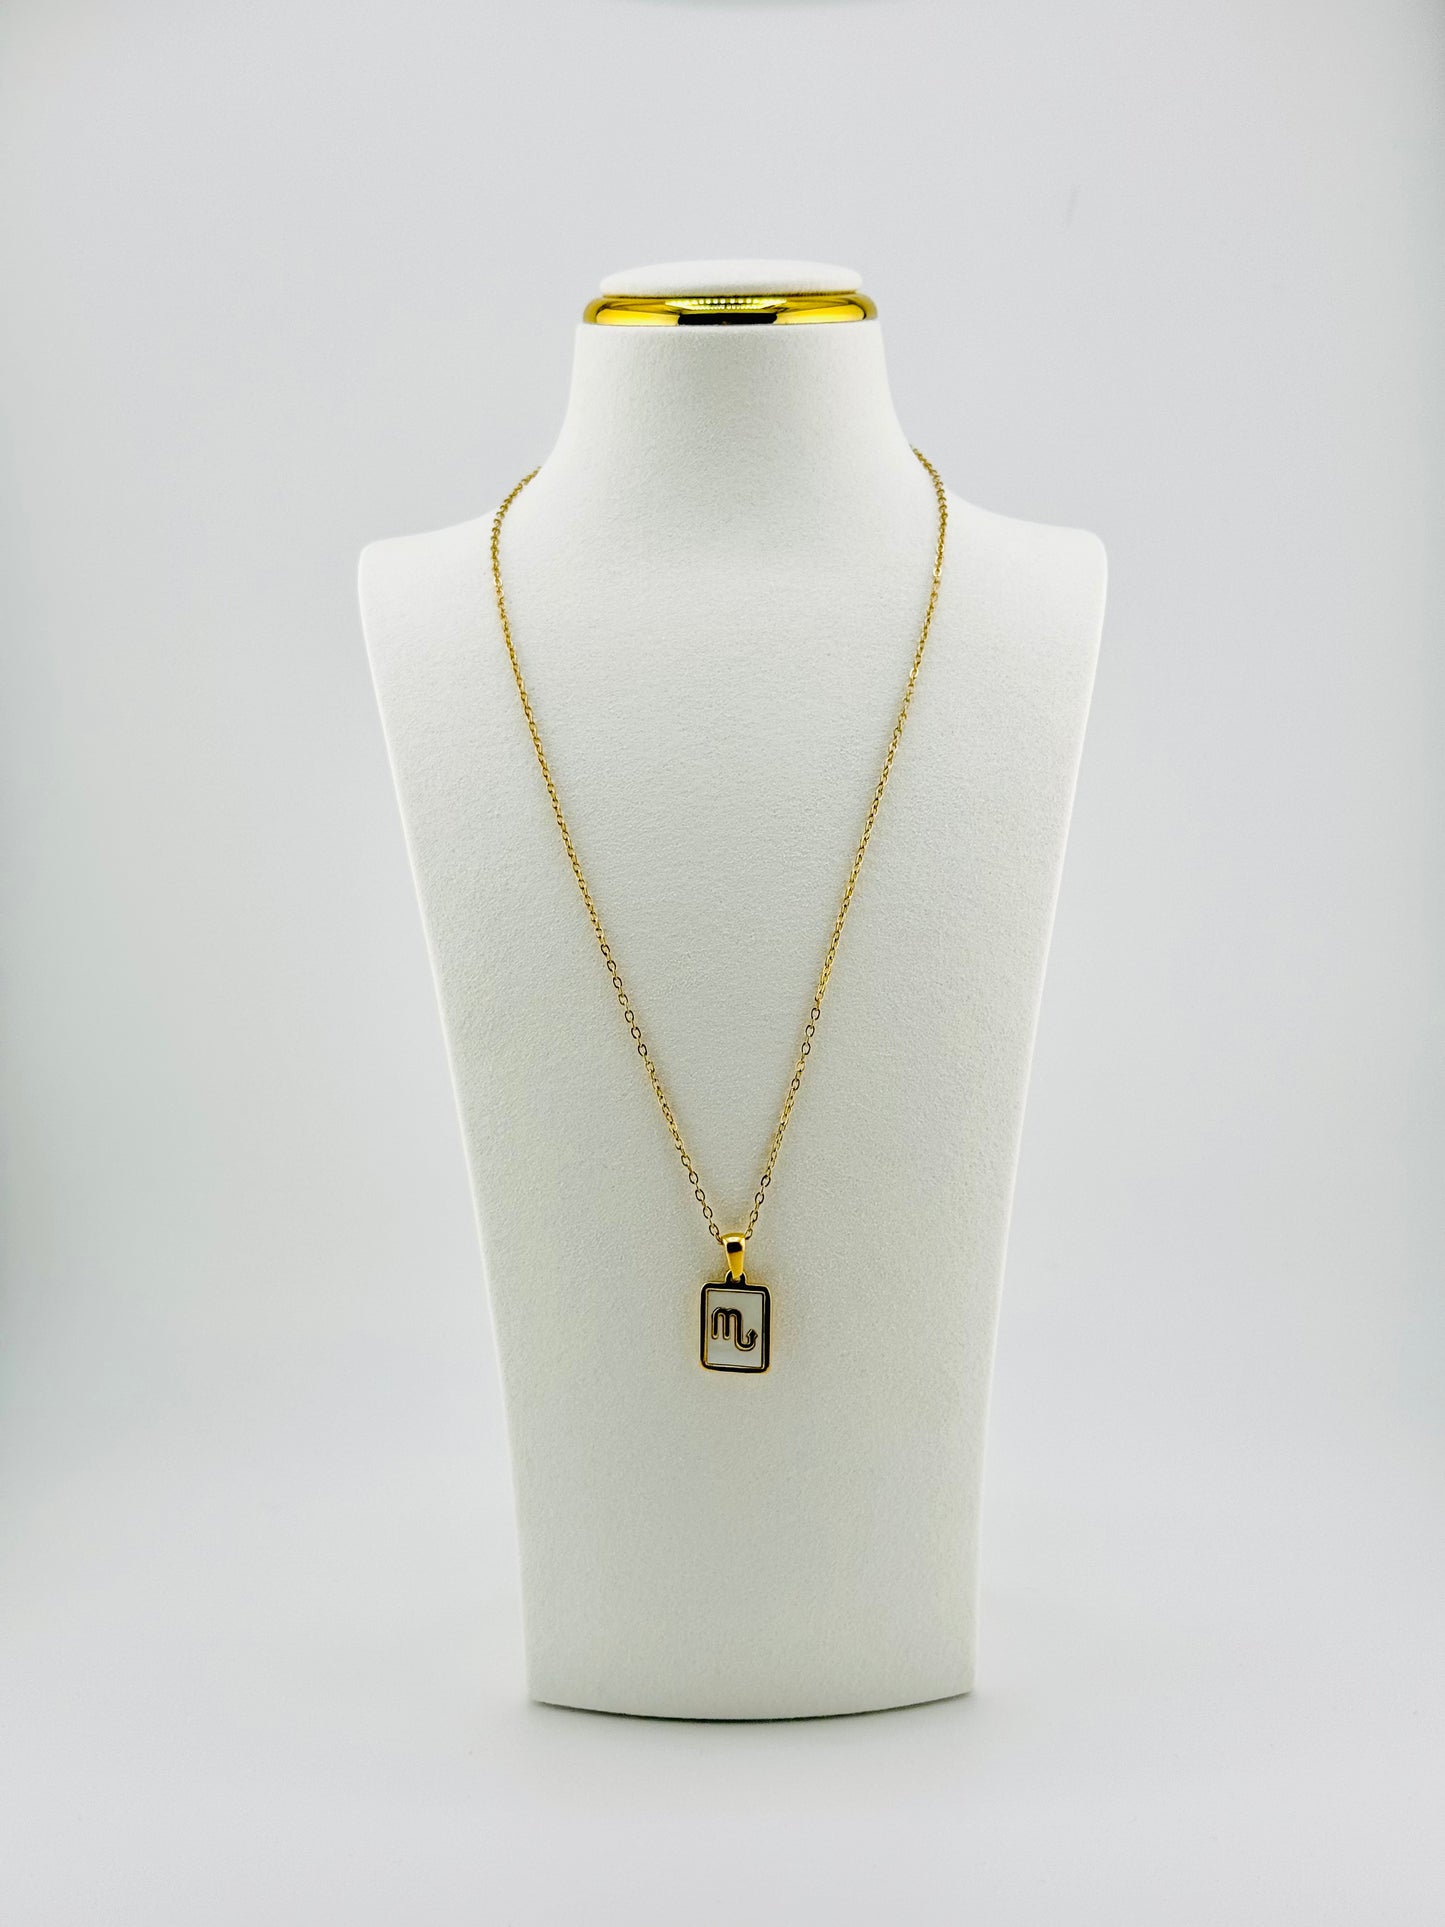 Scorpio gold filled zodiac sign necklace